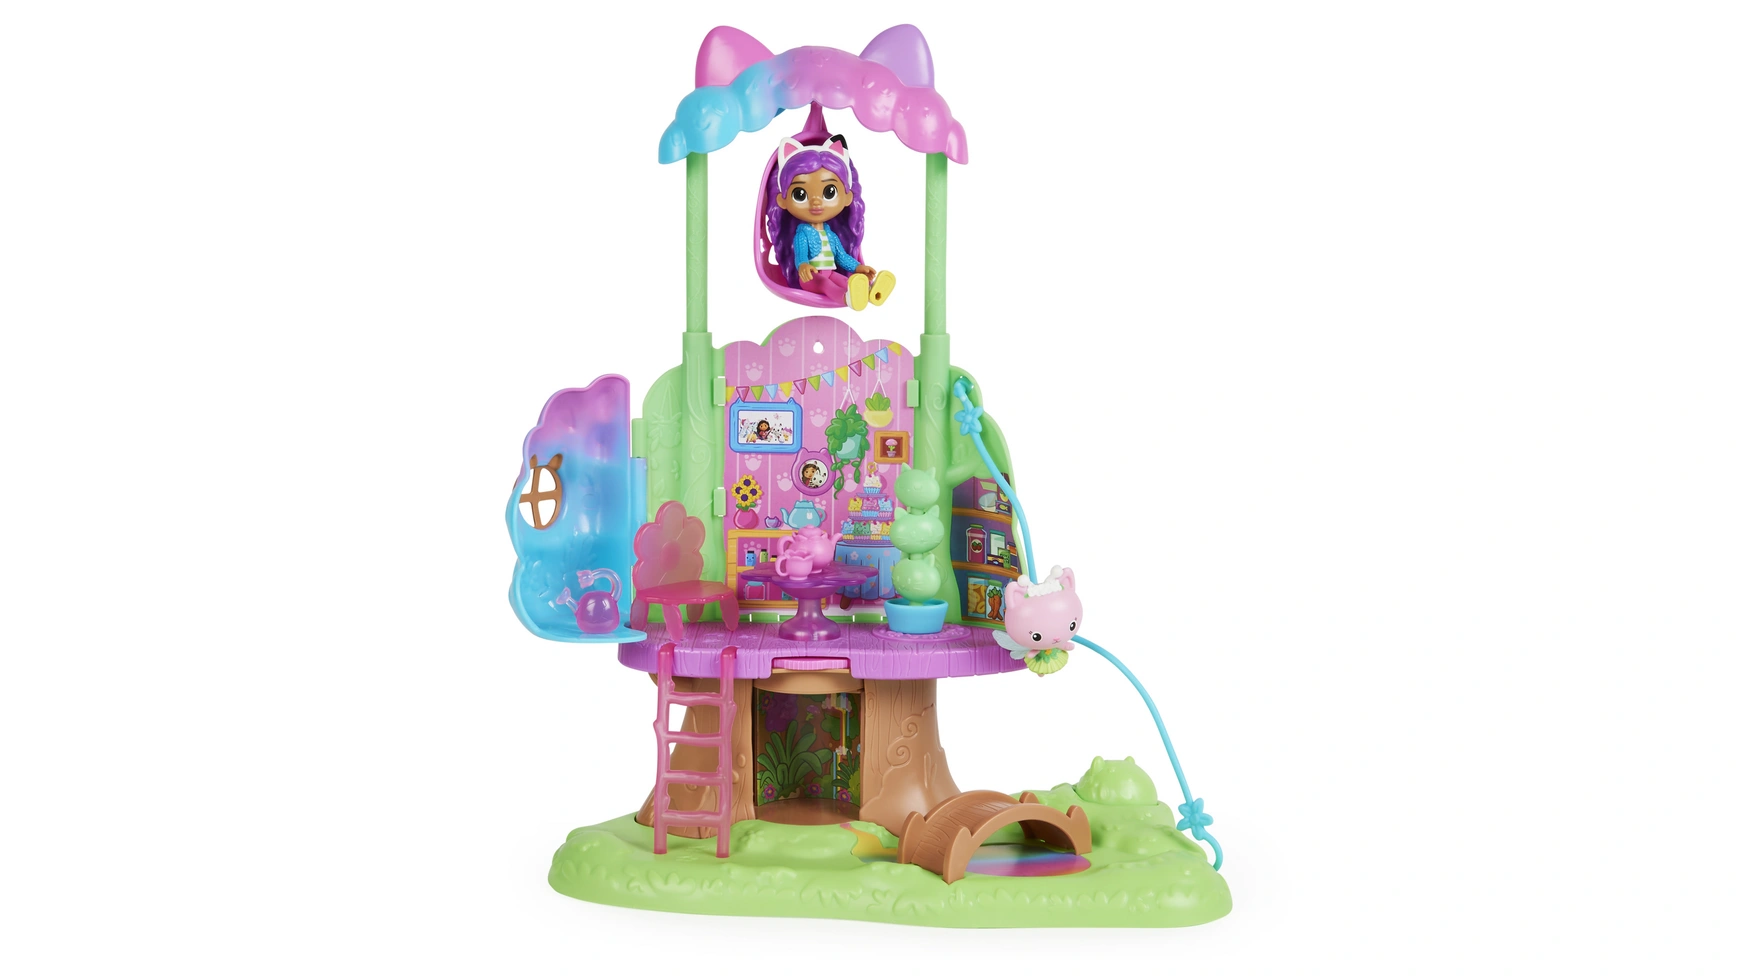 Gabbys Dollhouse Spin Master Садовый игровой набор Kitty Fairy трансформируемый домик на дереве с фигуркой Габби и кошки kidkraft charlie wooden dollhouse